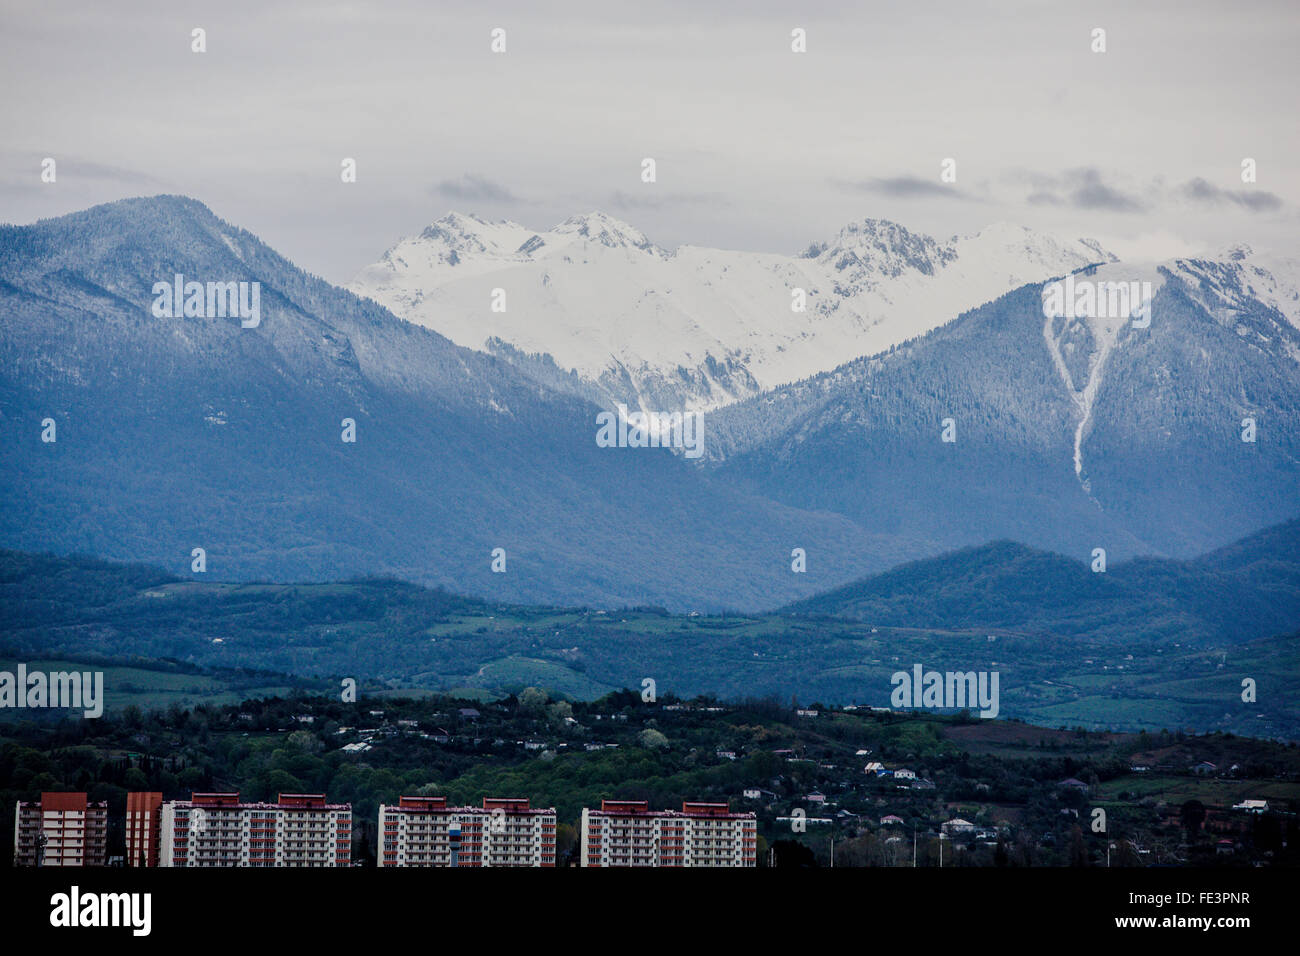 Caucasus Mountains Stock Photo